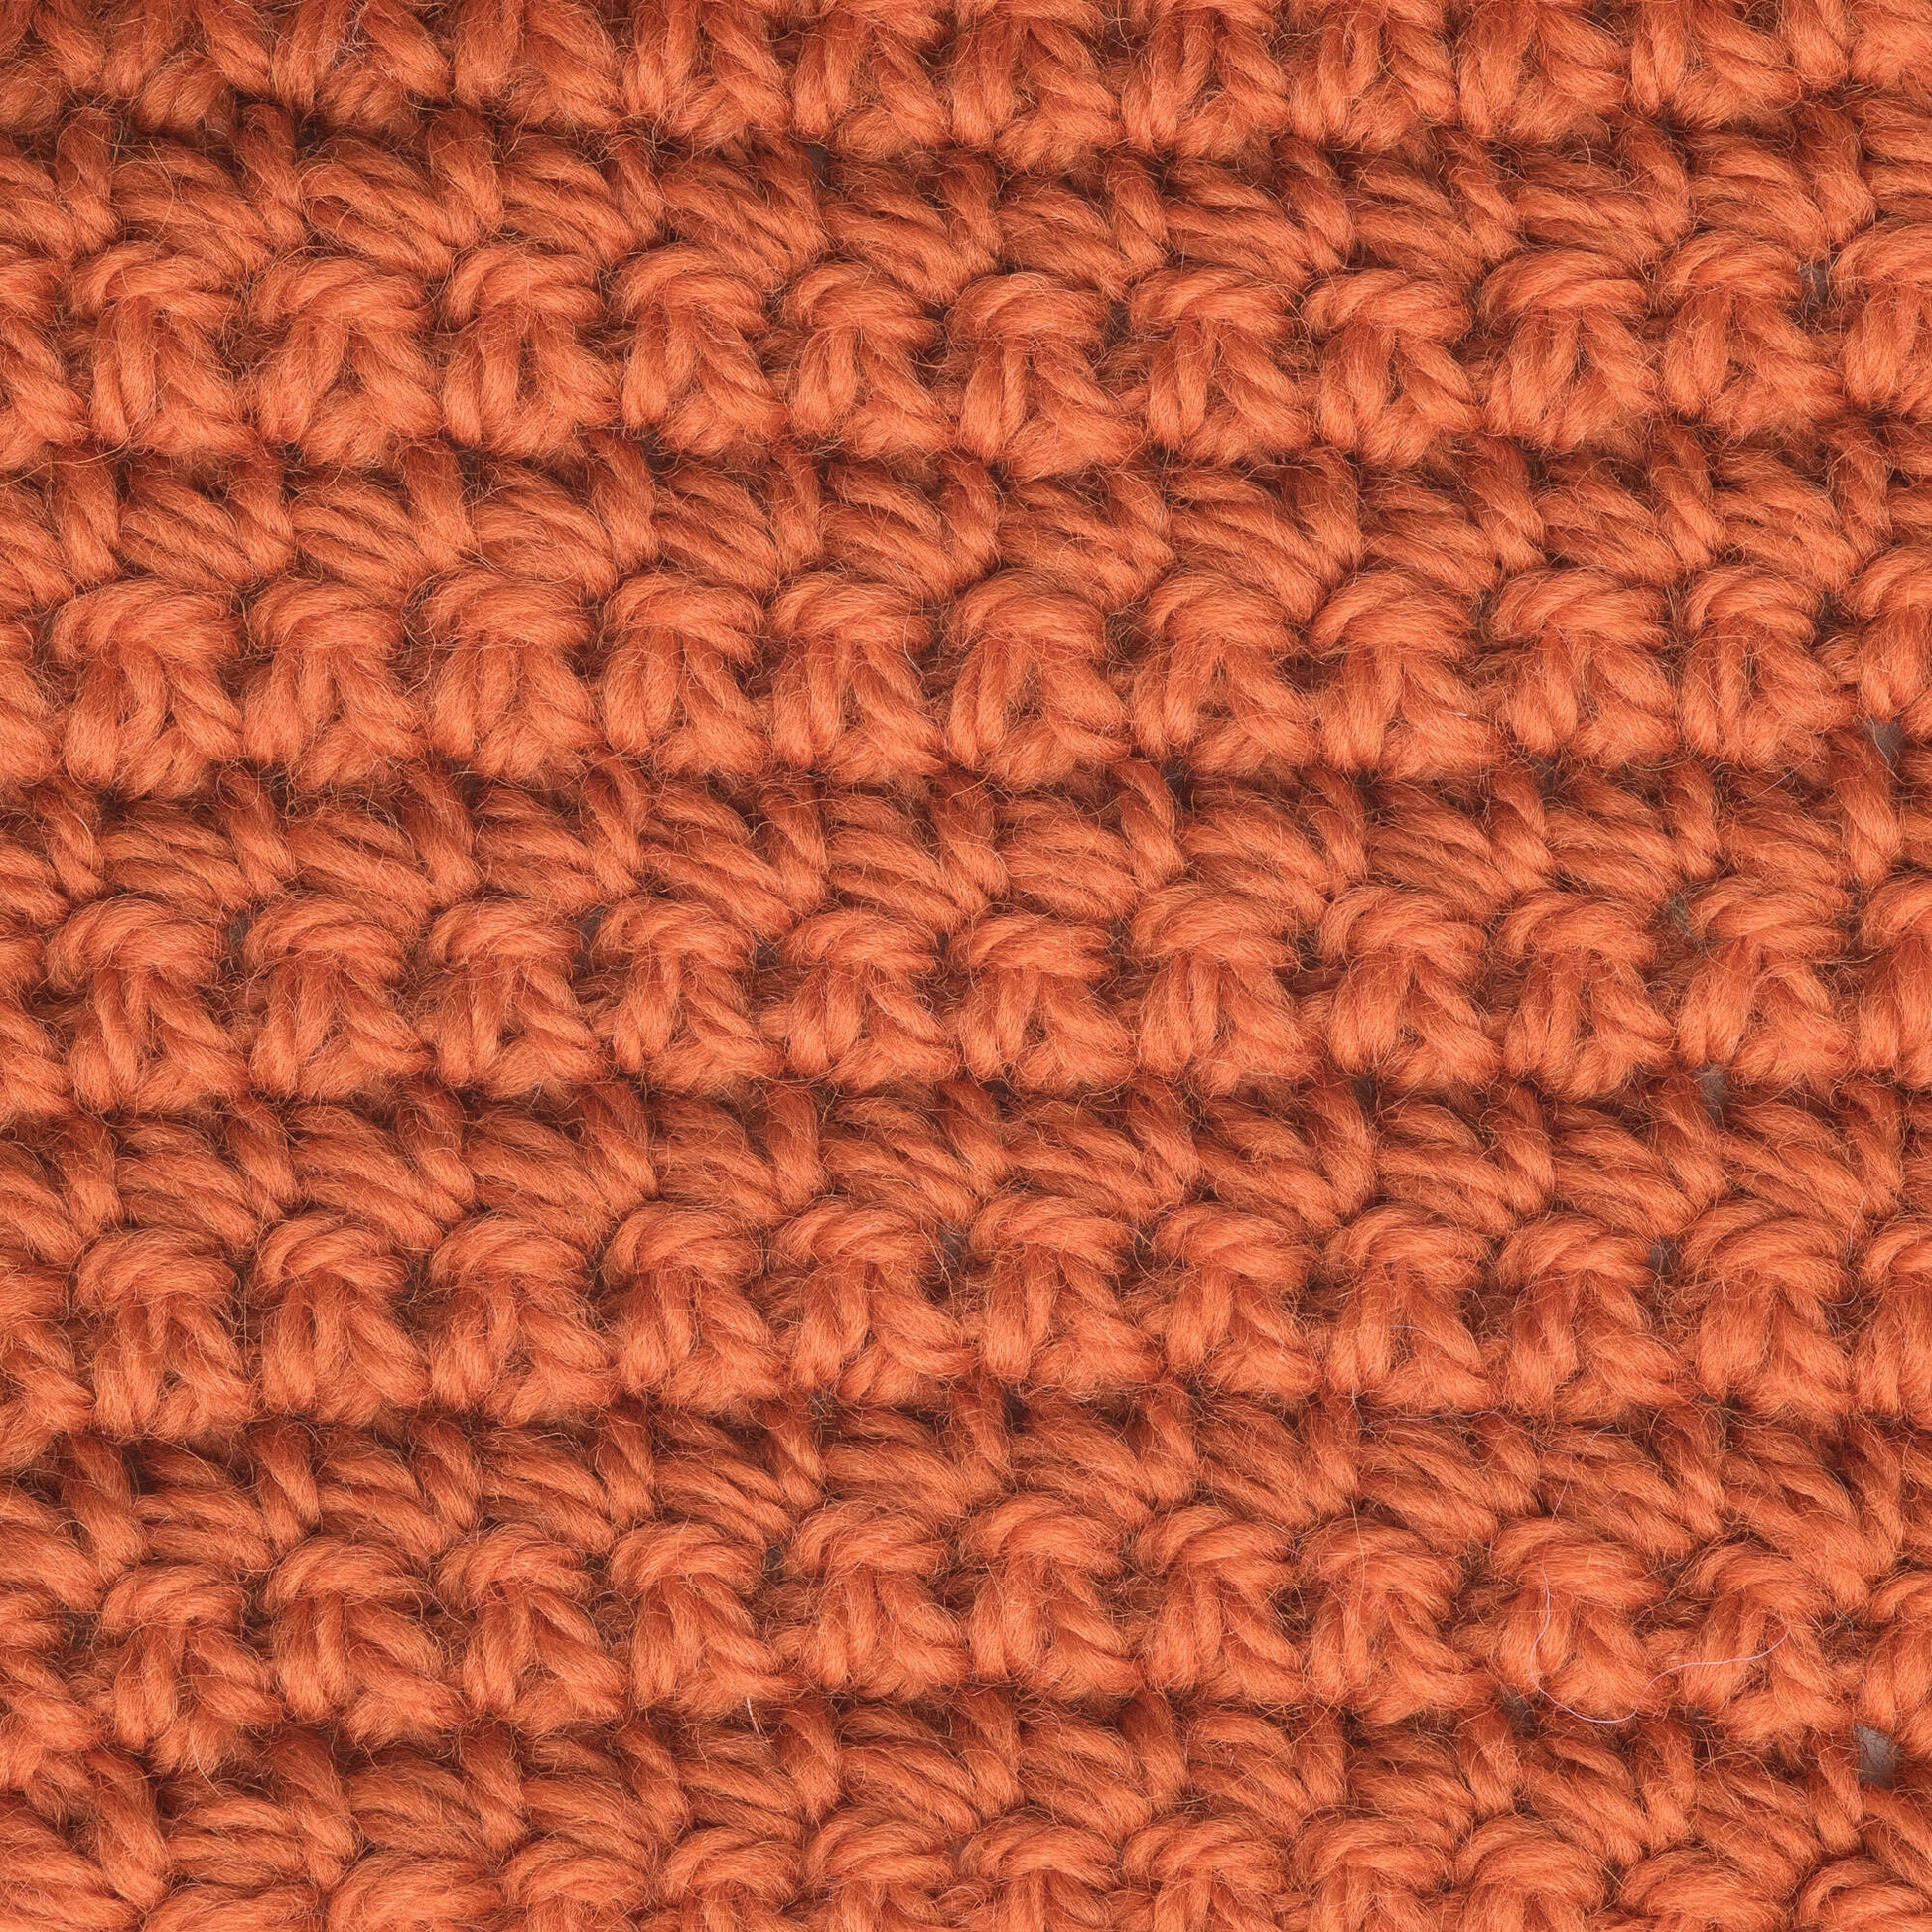 Patons Classic Wool Indigo Yarn - 5 Pack of 3.5oz/100g - Wool - 4 Medium -  210 Yards - Knitting/Crochet 